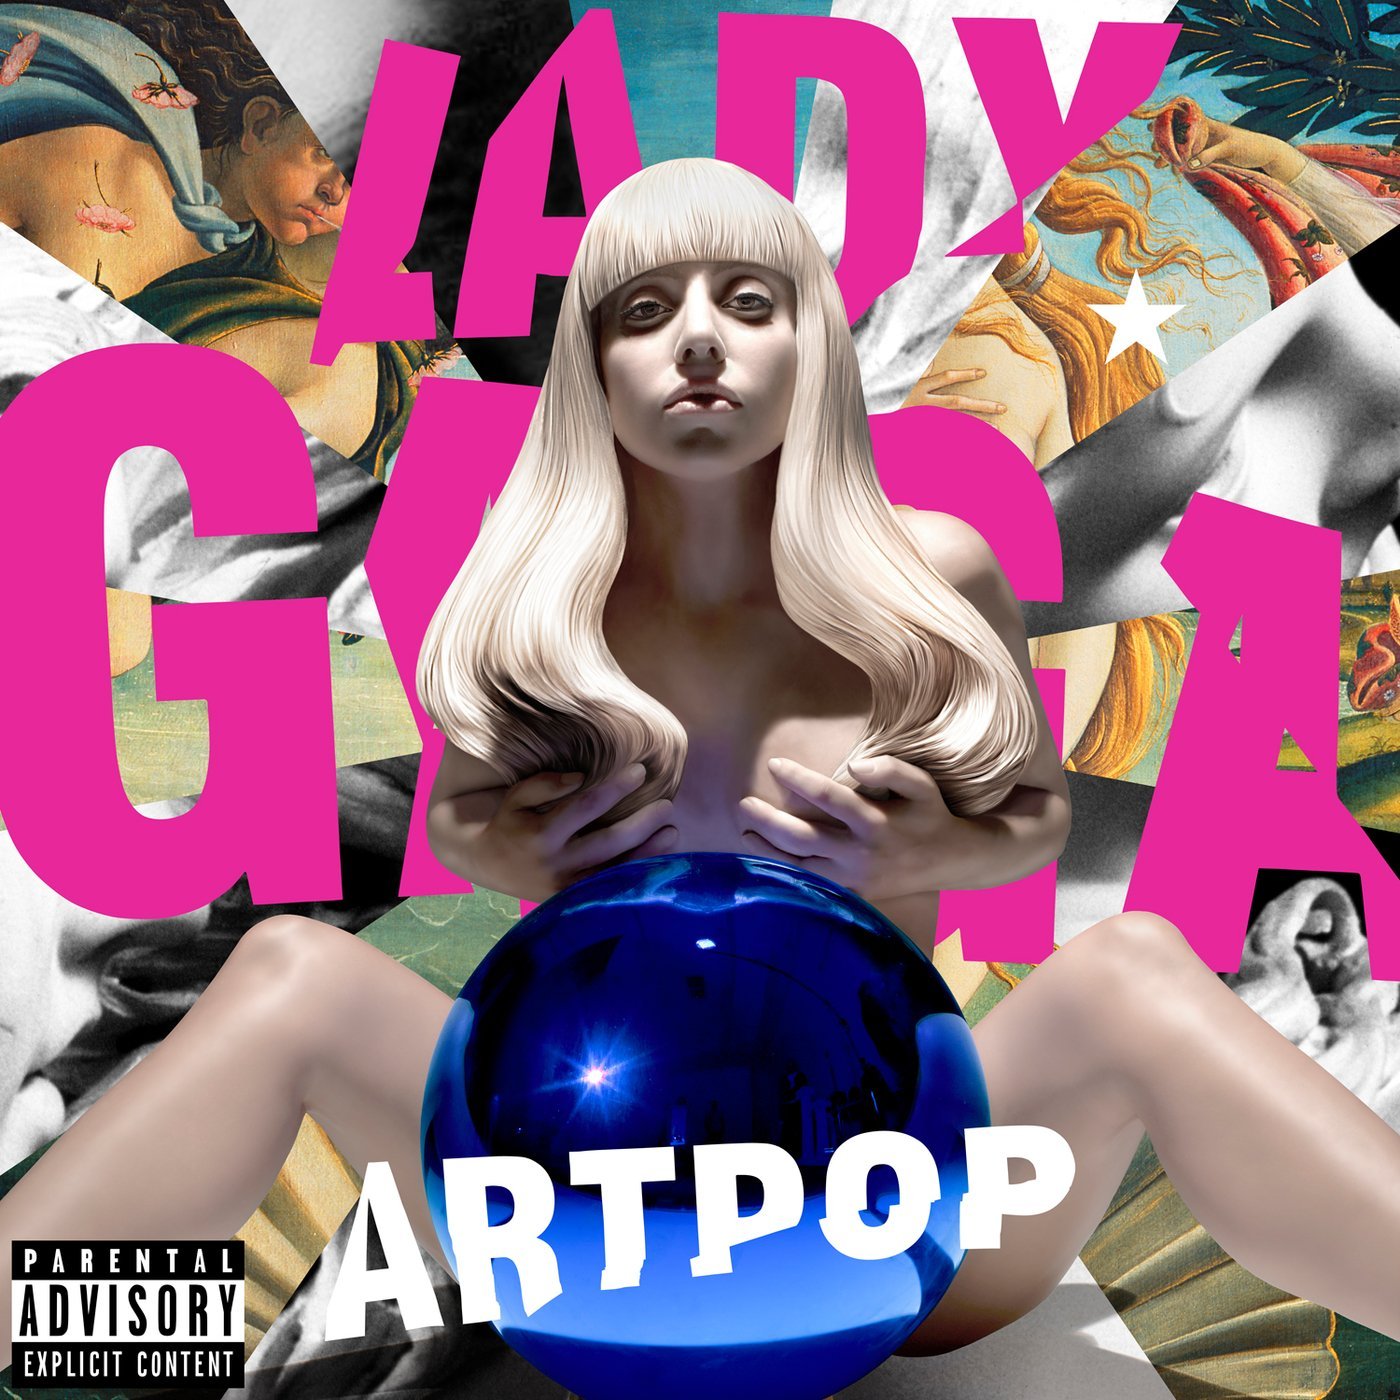 boom music reviews - Artpop by Lady Gaga album cover